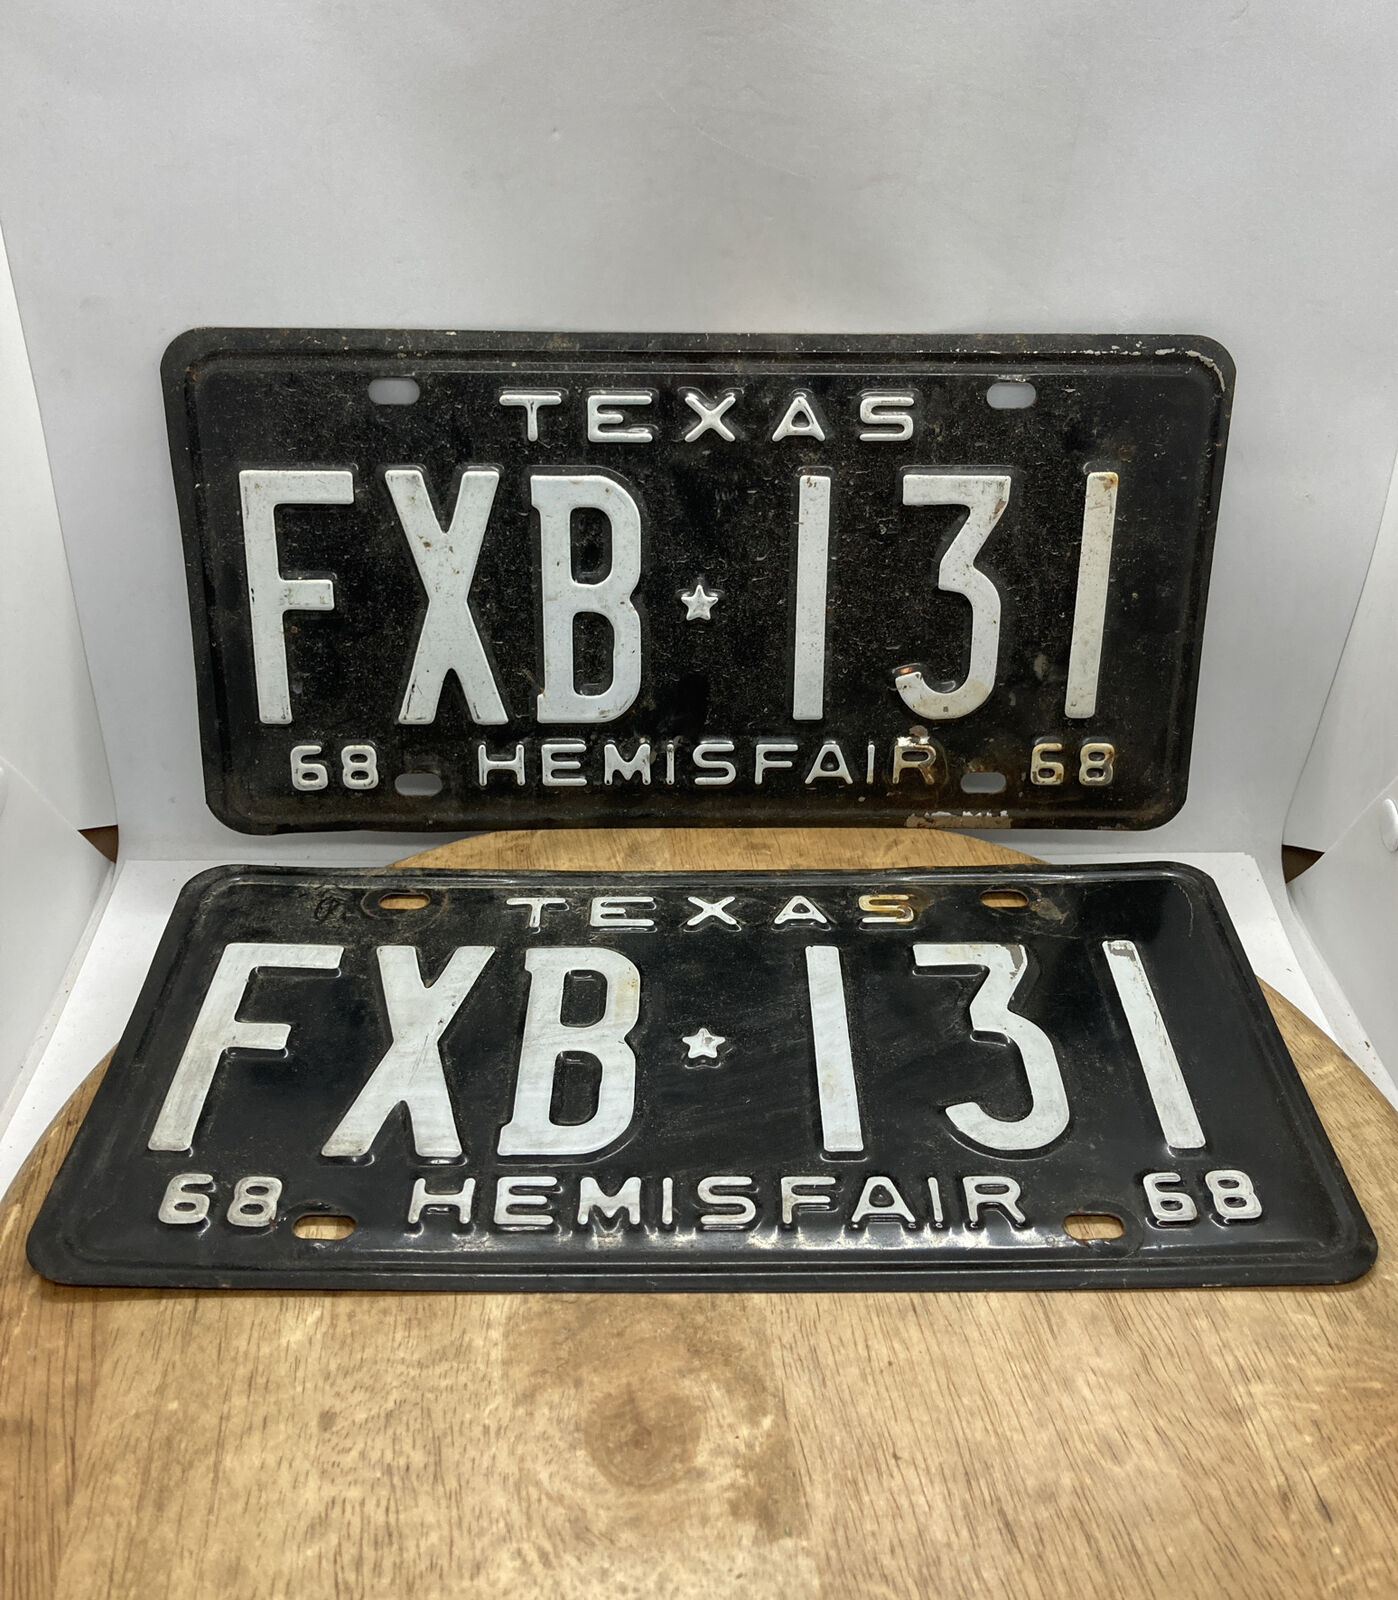 1968 Texas license plate pair FXB131 Expired As Is As Shown HEMISFAIR